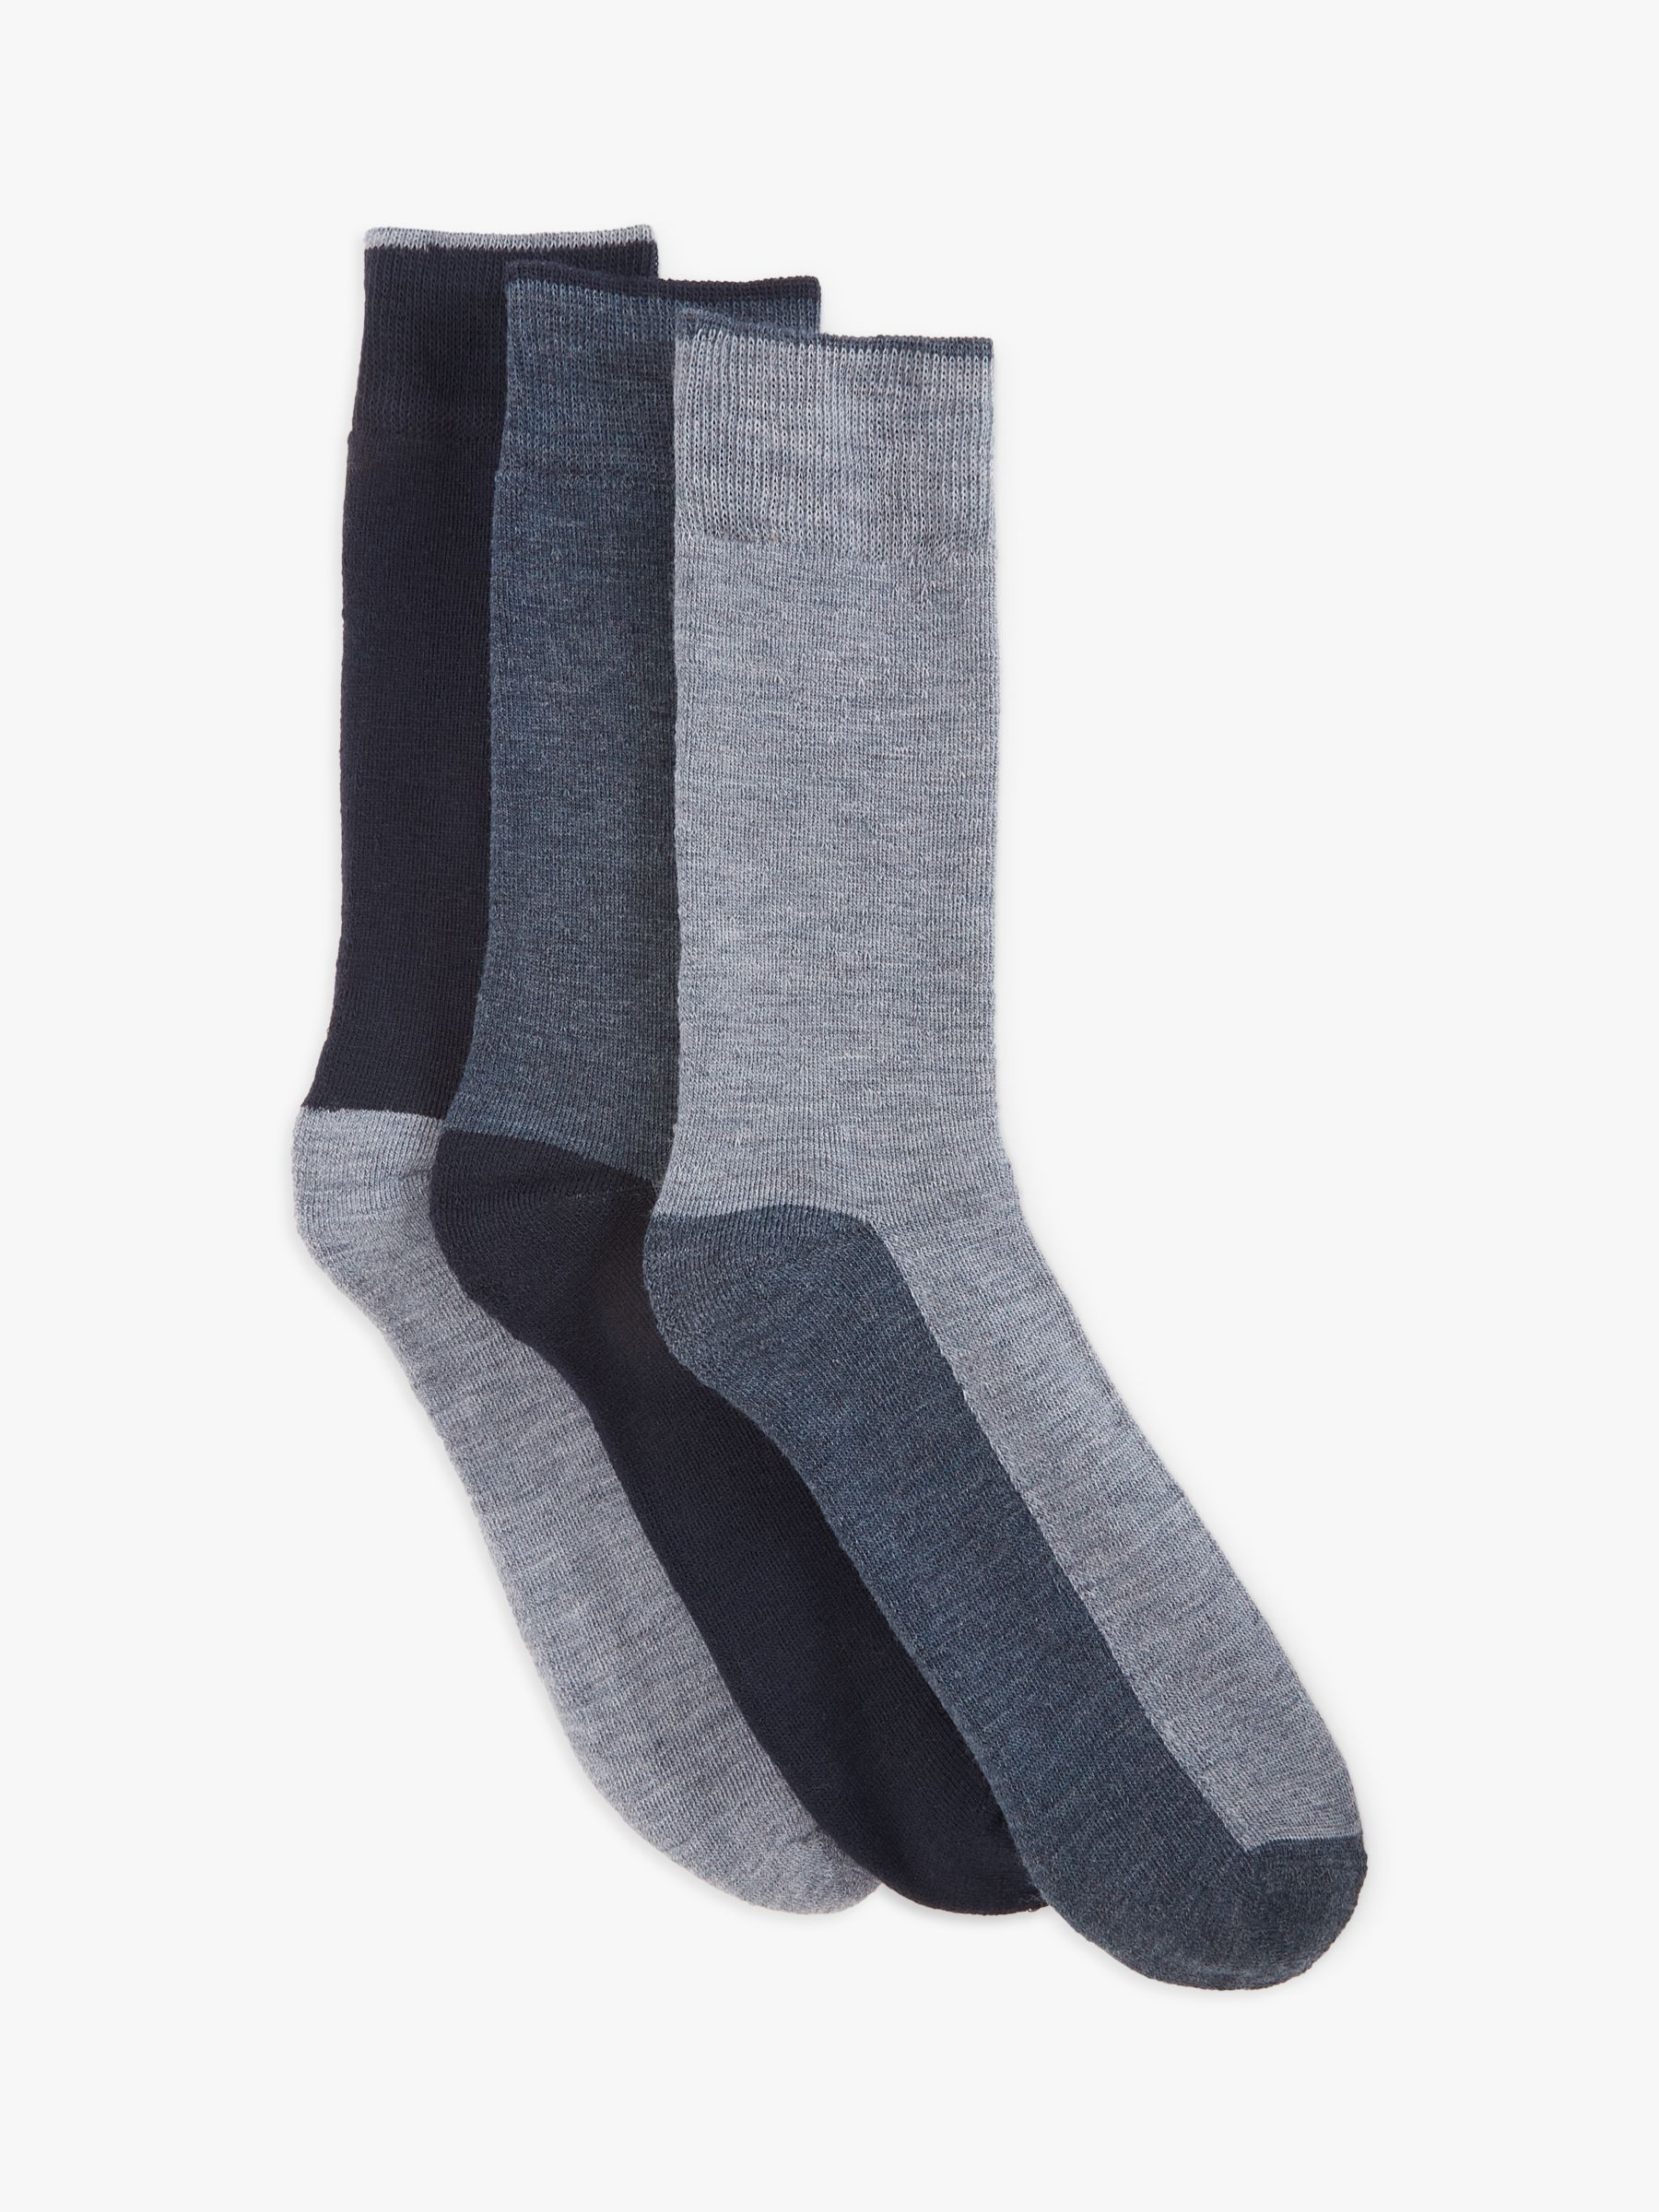 John Lewis Thermal Wool Blend Socks, Pack of 3, One Size, Blues